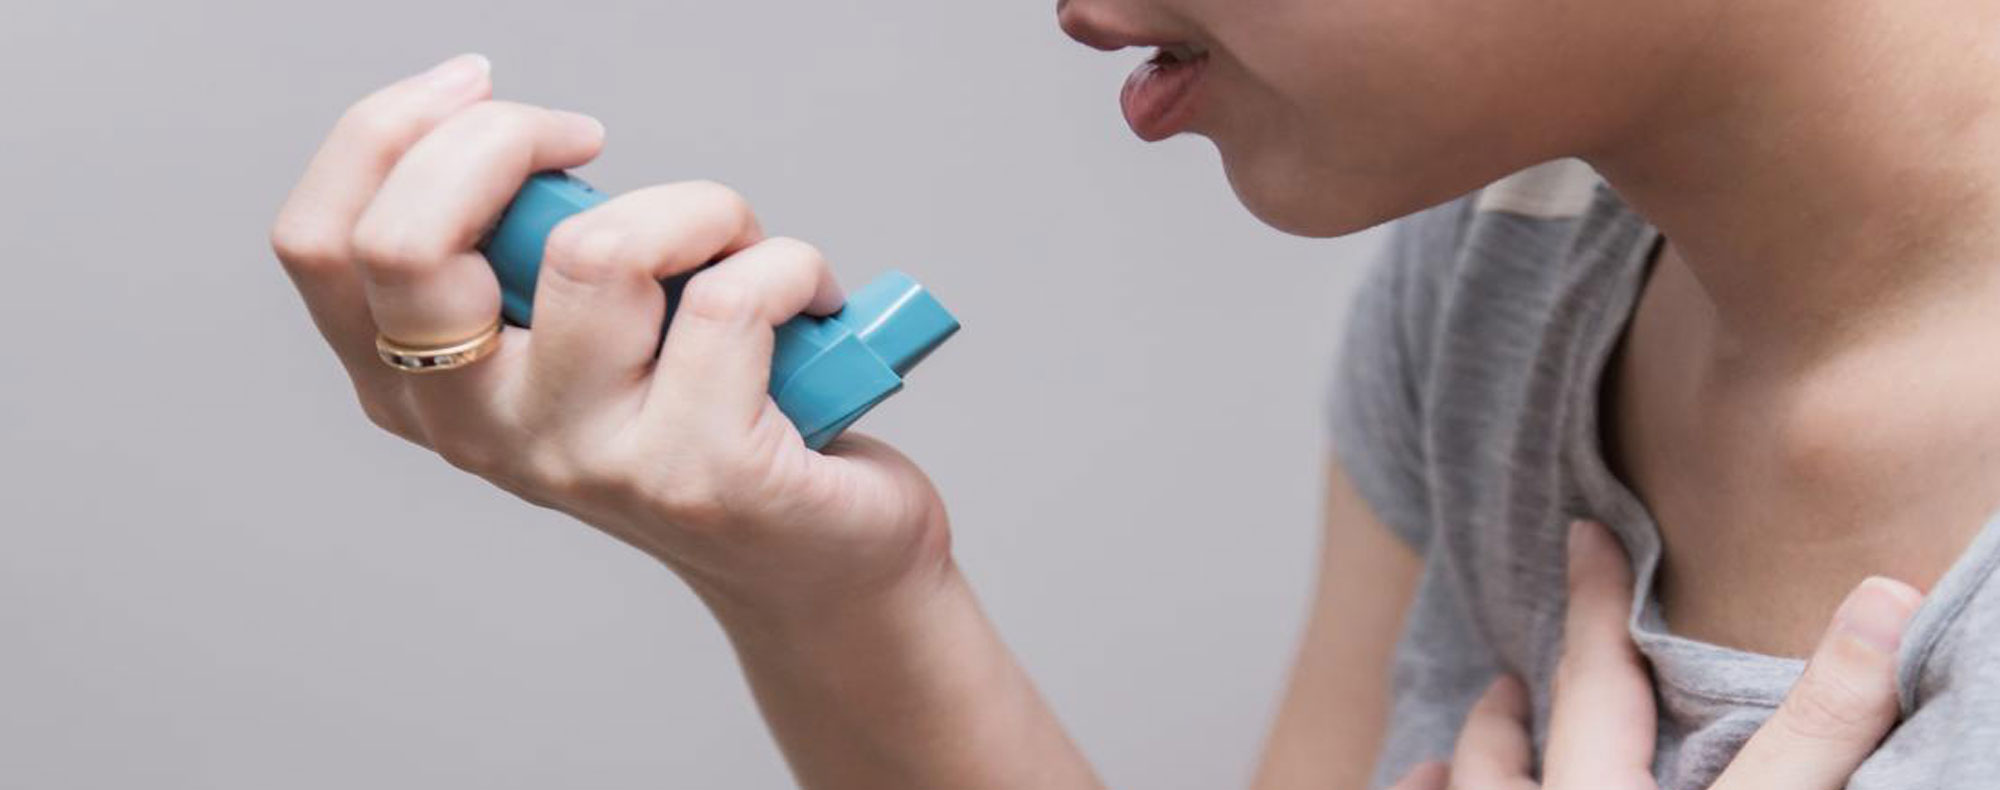 Astma therapie